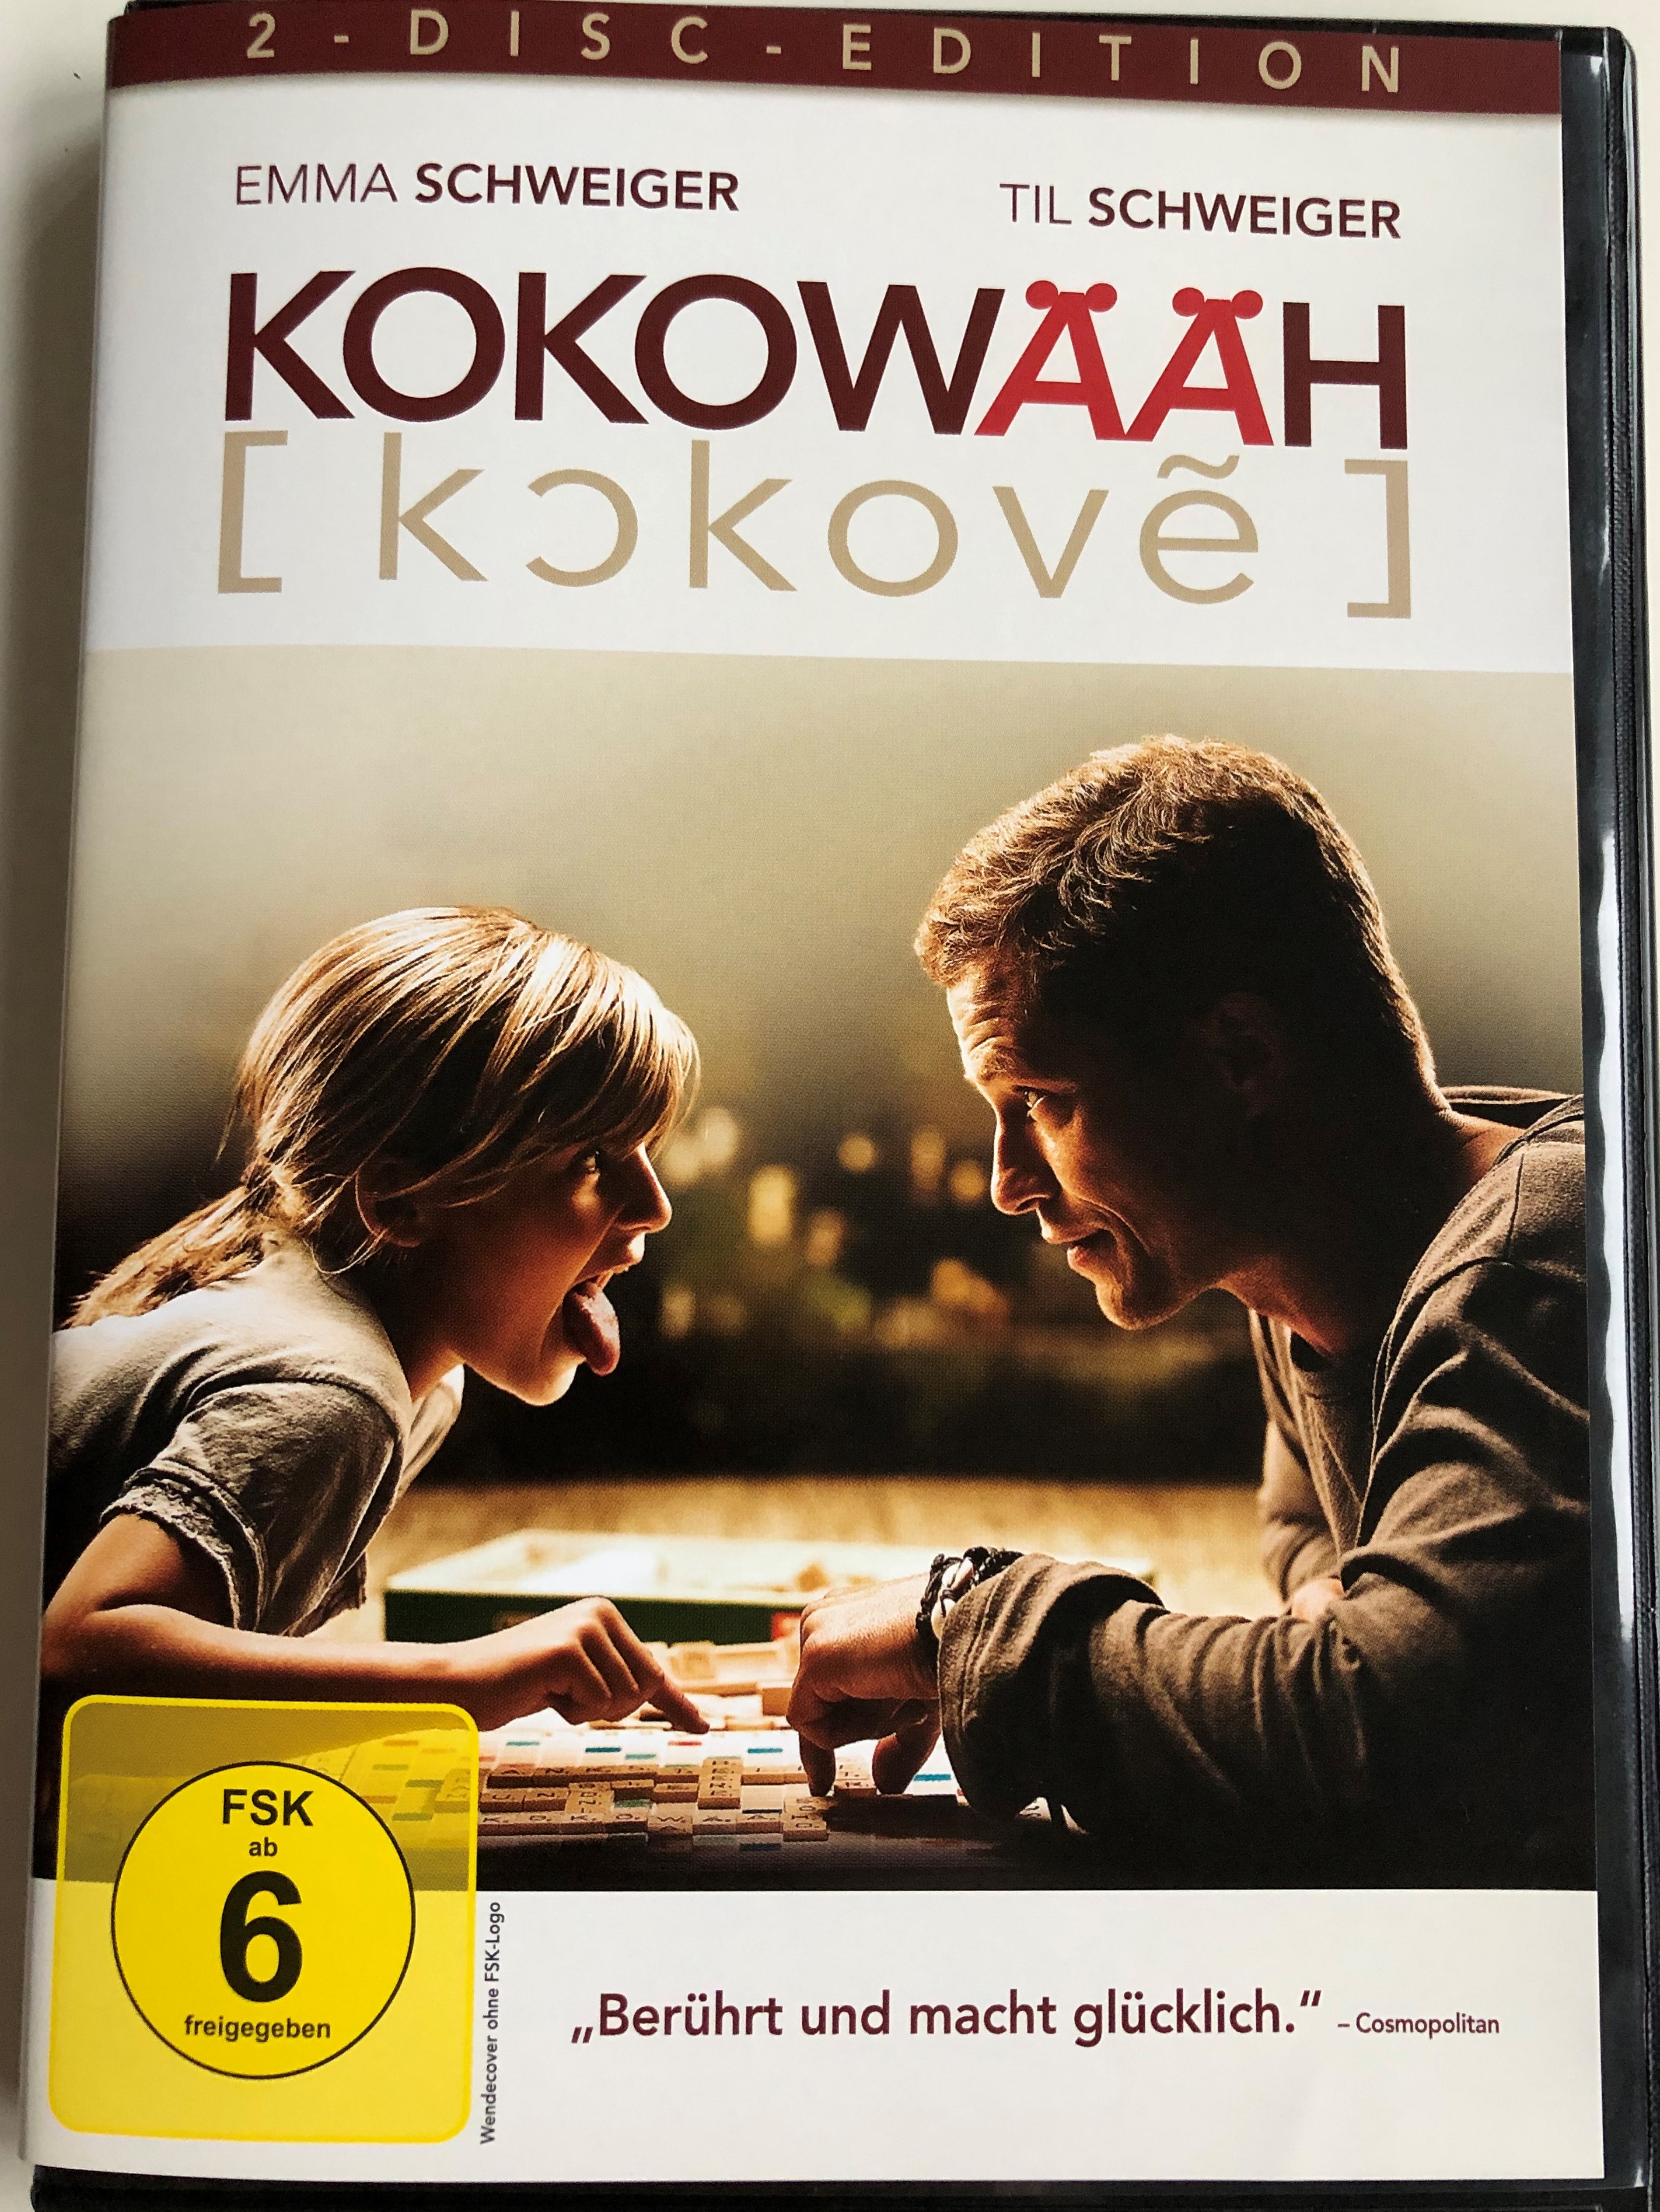 kokow-h-dvd-2011-directed-by-til-schweiger-1.jpg